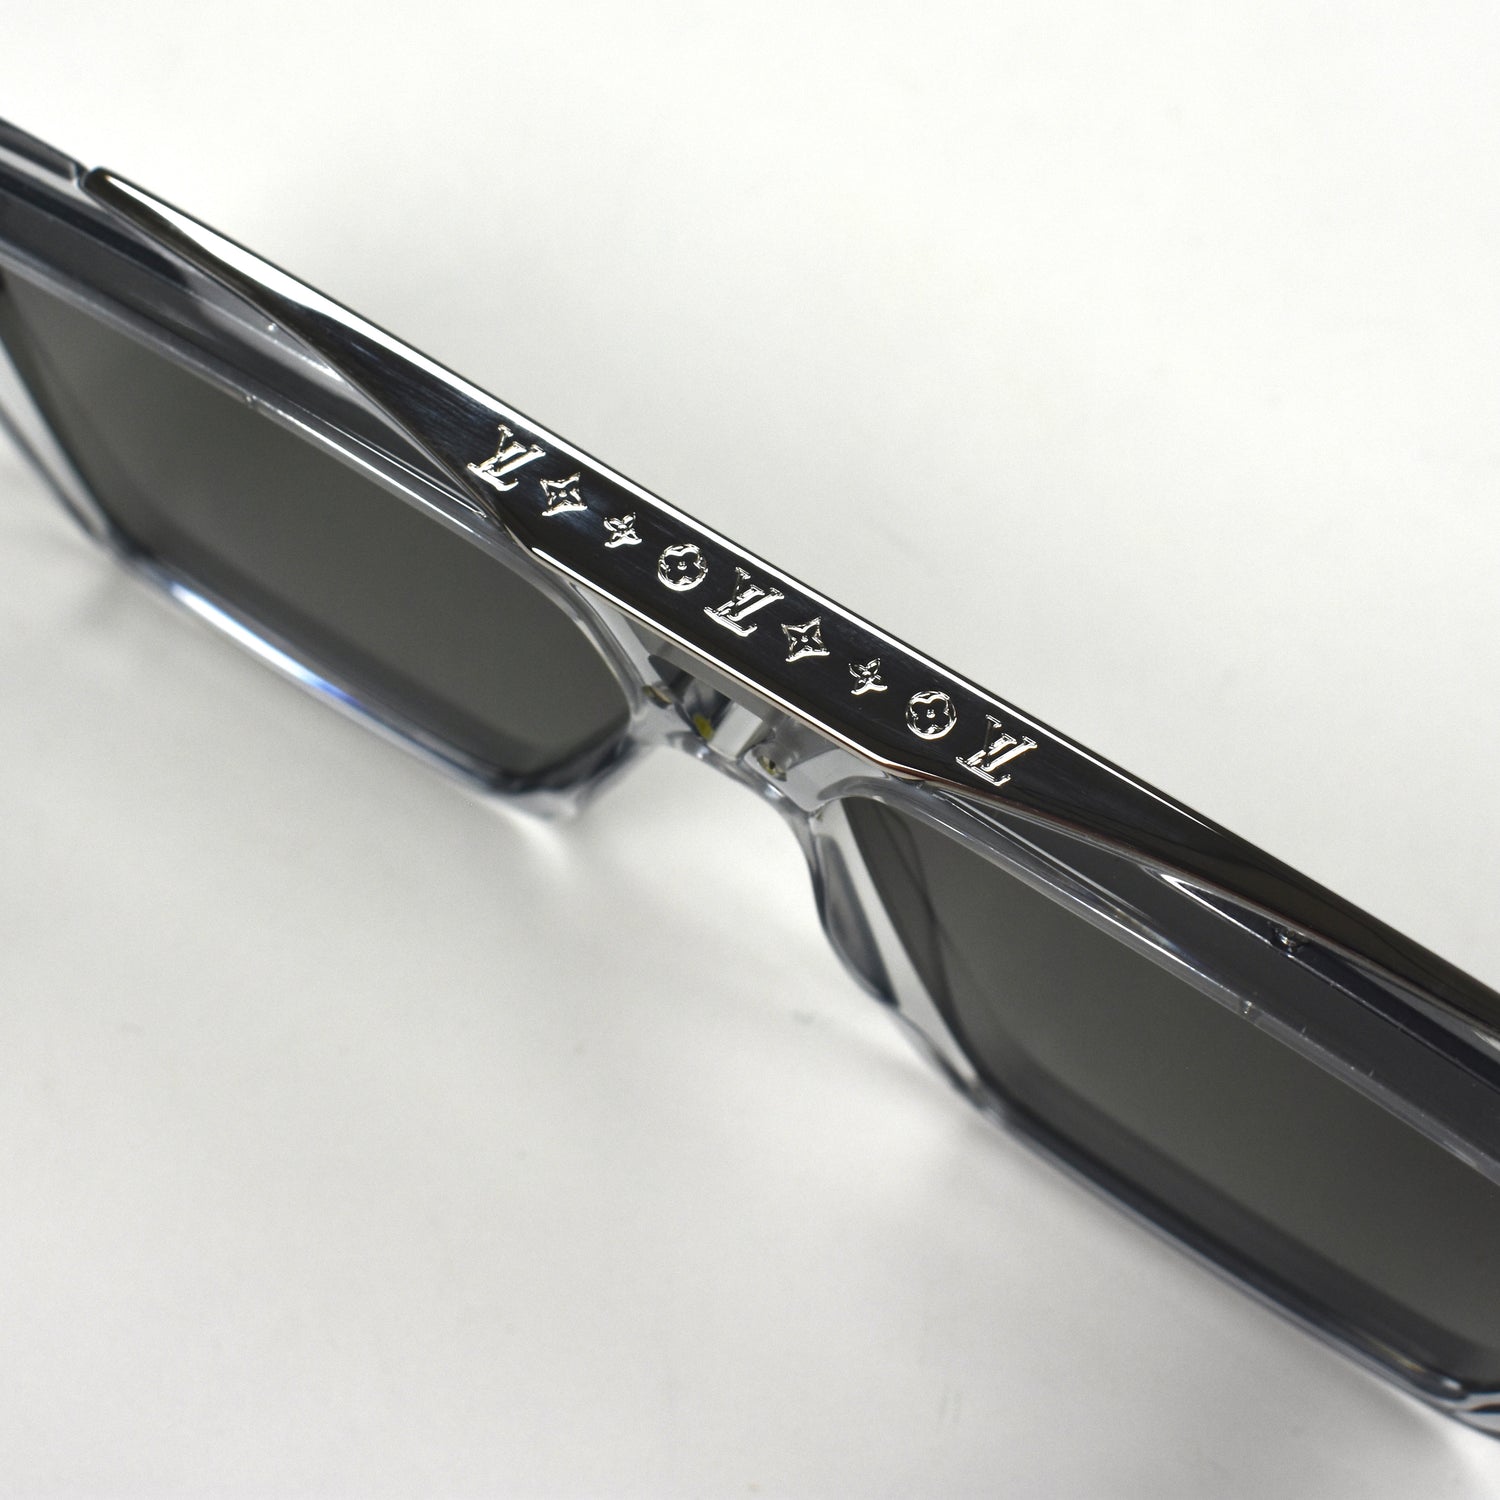 Louis Vuitton Z1811E 1.1 Evidence Sunglasses, Clear, E